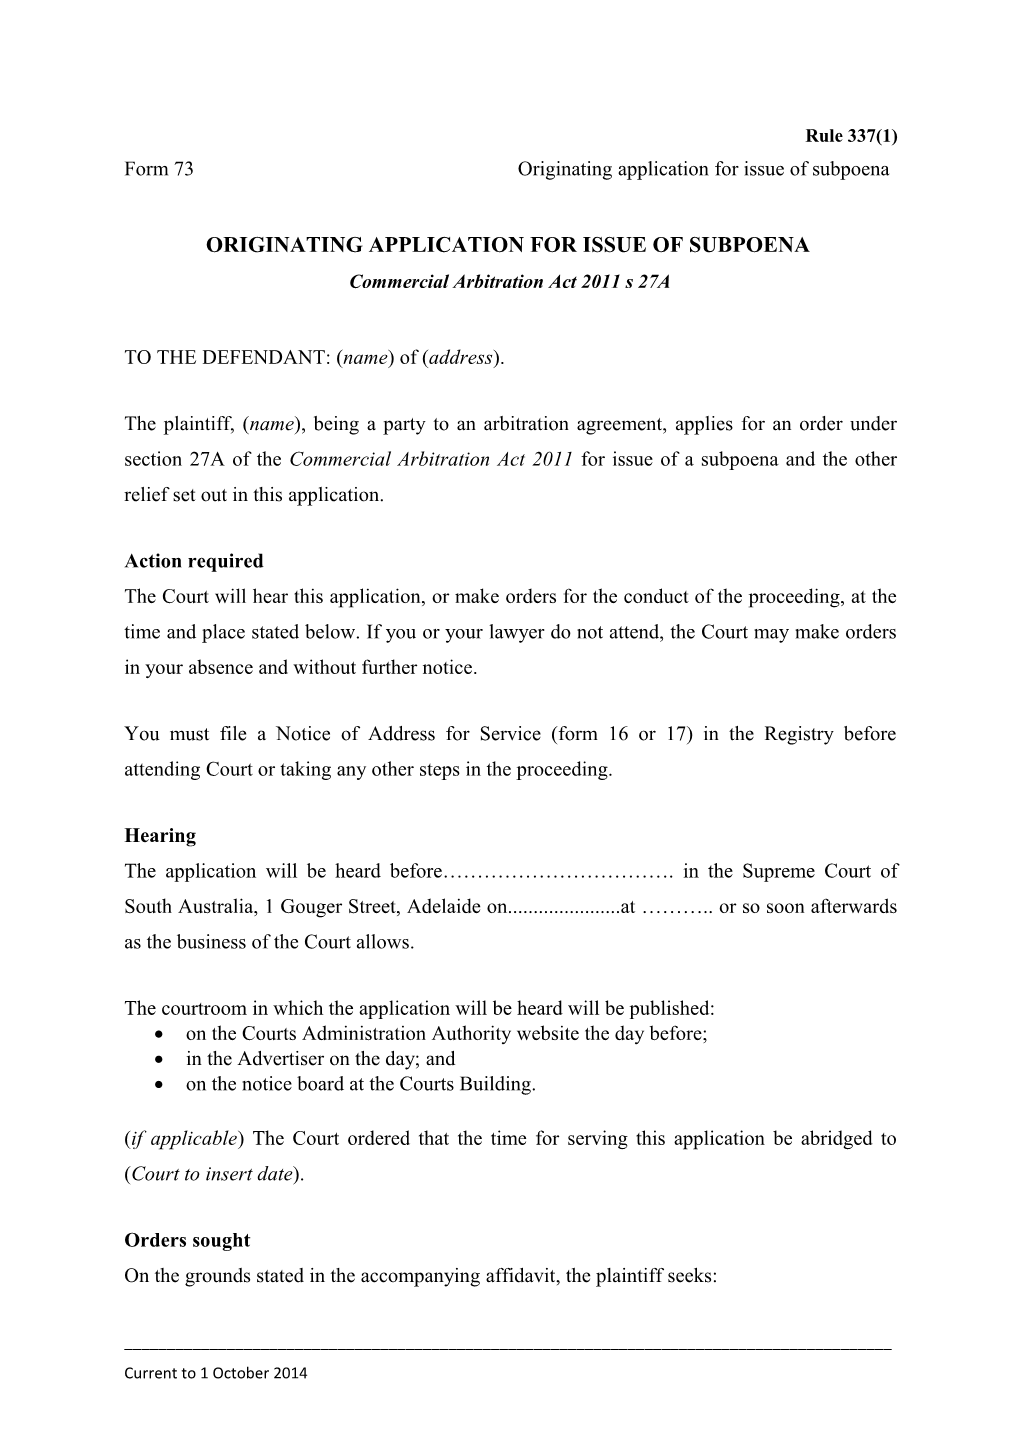 Form 73 - Originating Application for Issue of Subpoena